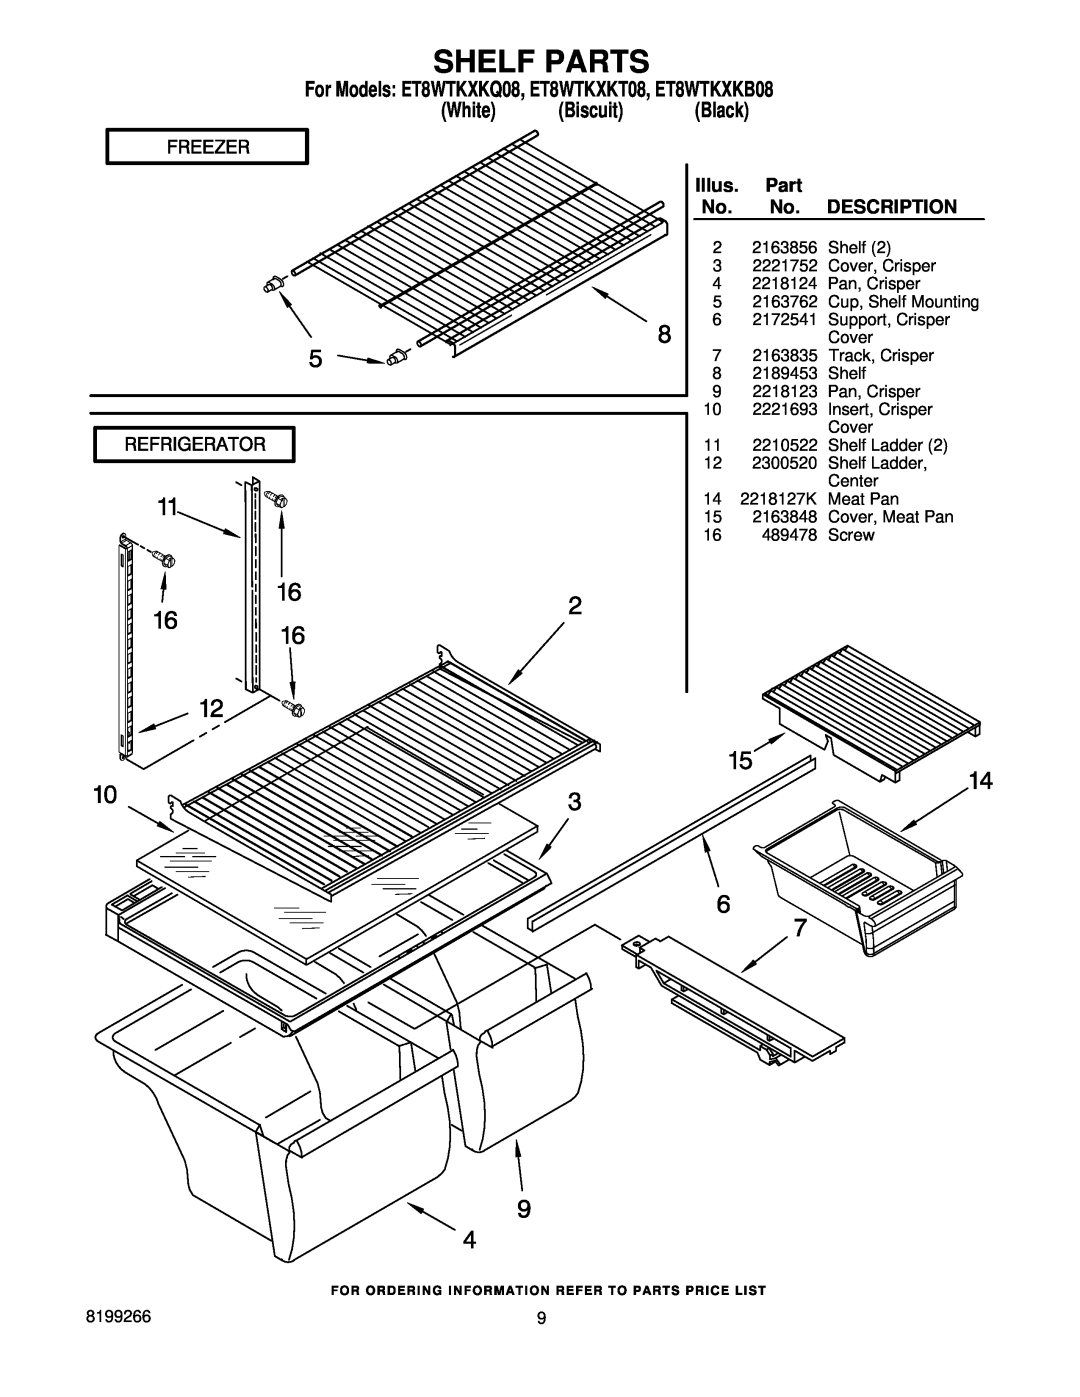 Whirlpool manual Shelf Parts, For Models ET8WTKXKQ08, ET8WTKXKT08, ET8WTKXKB08 White Biscuit Black, Illus, Description 